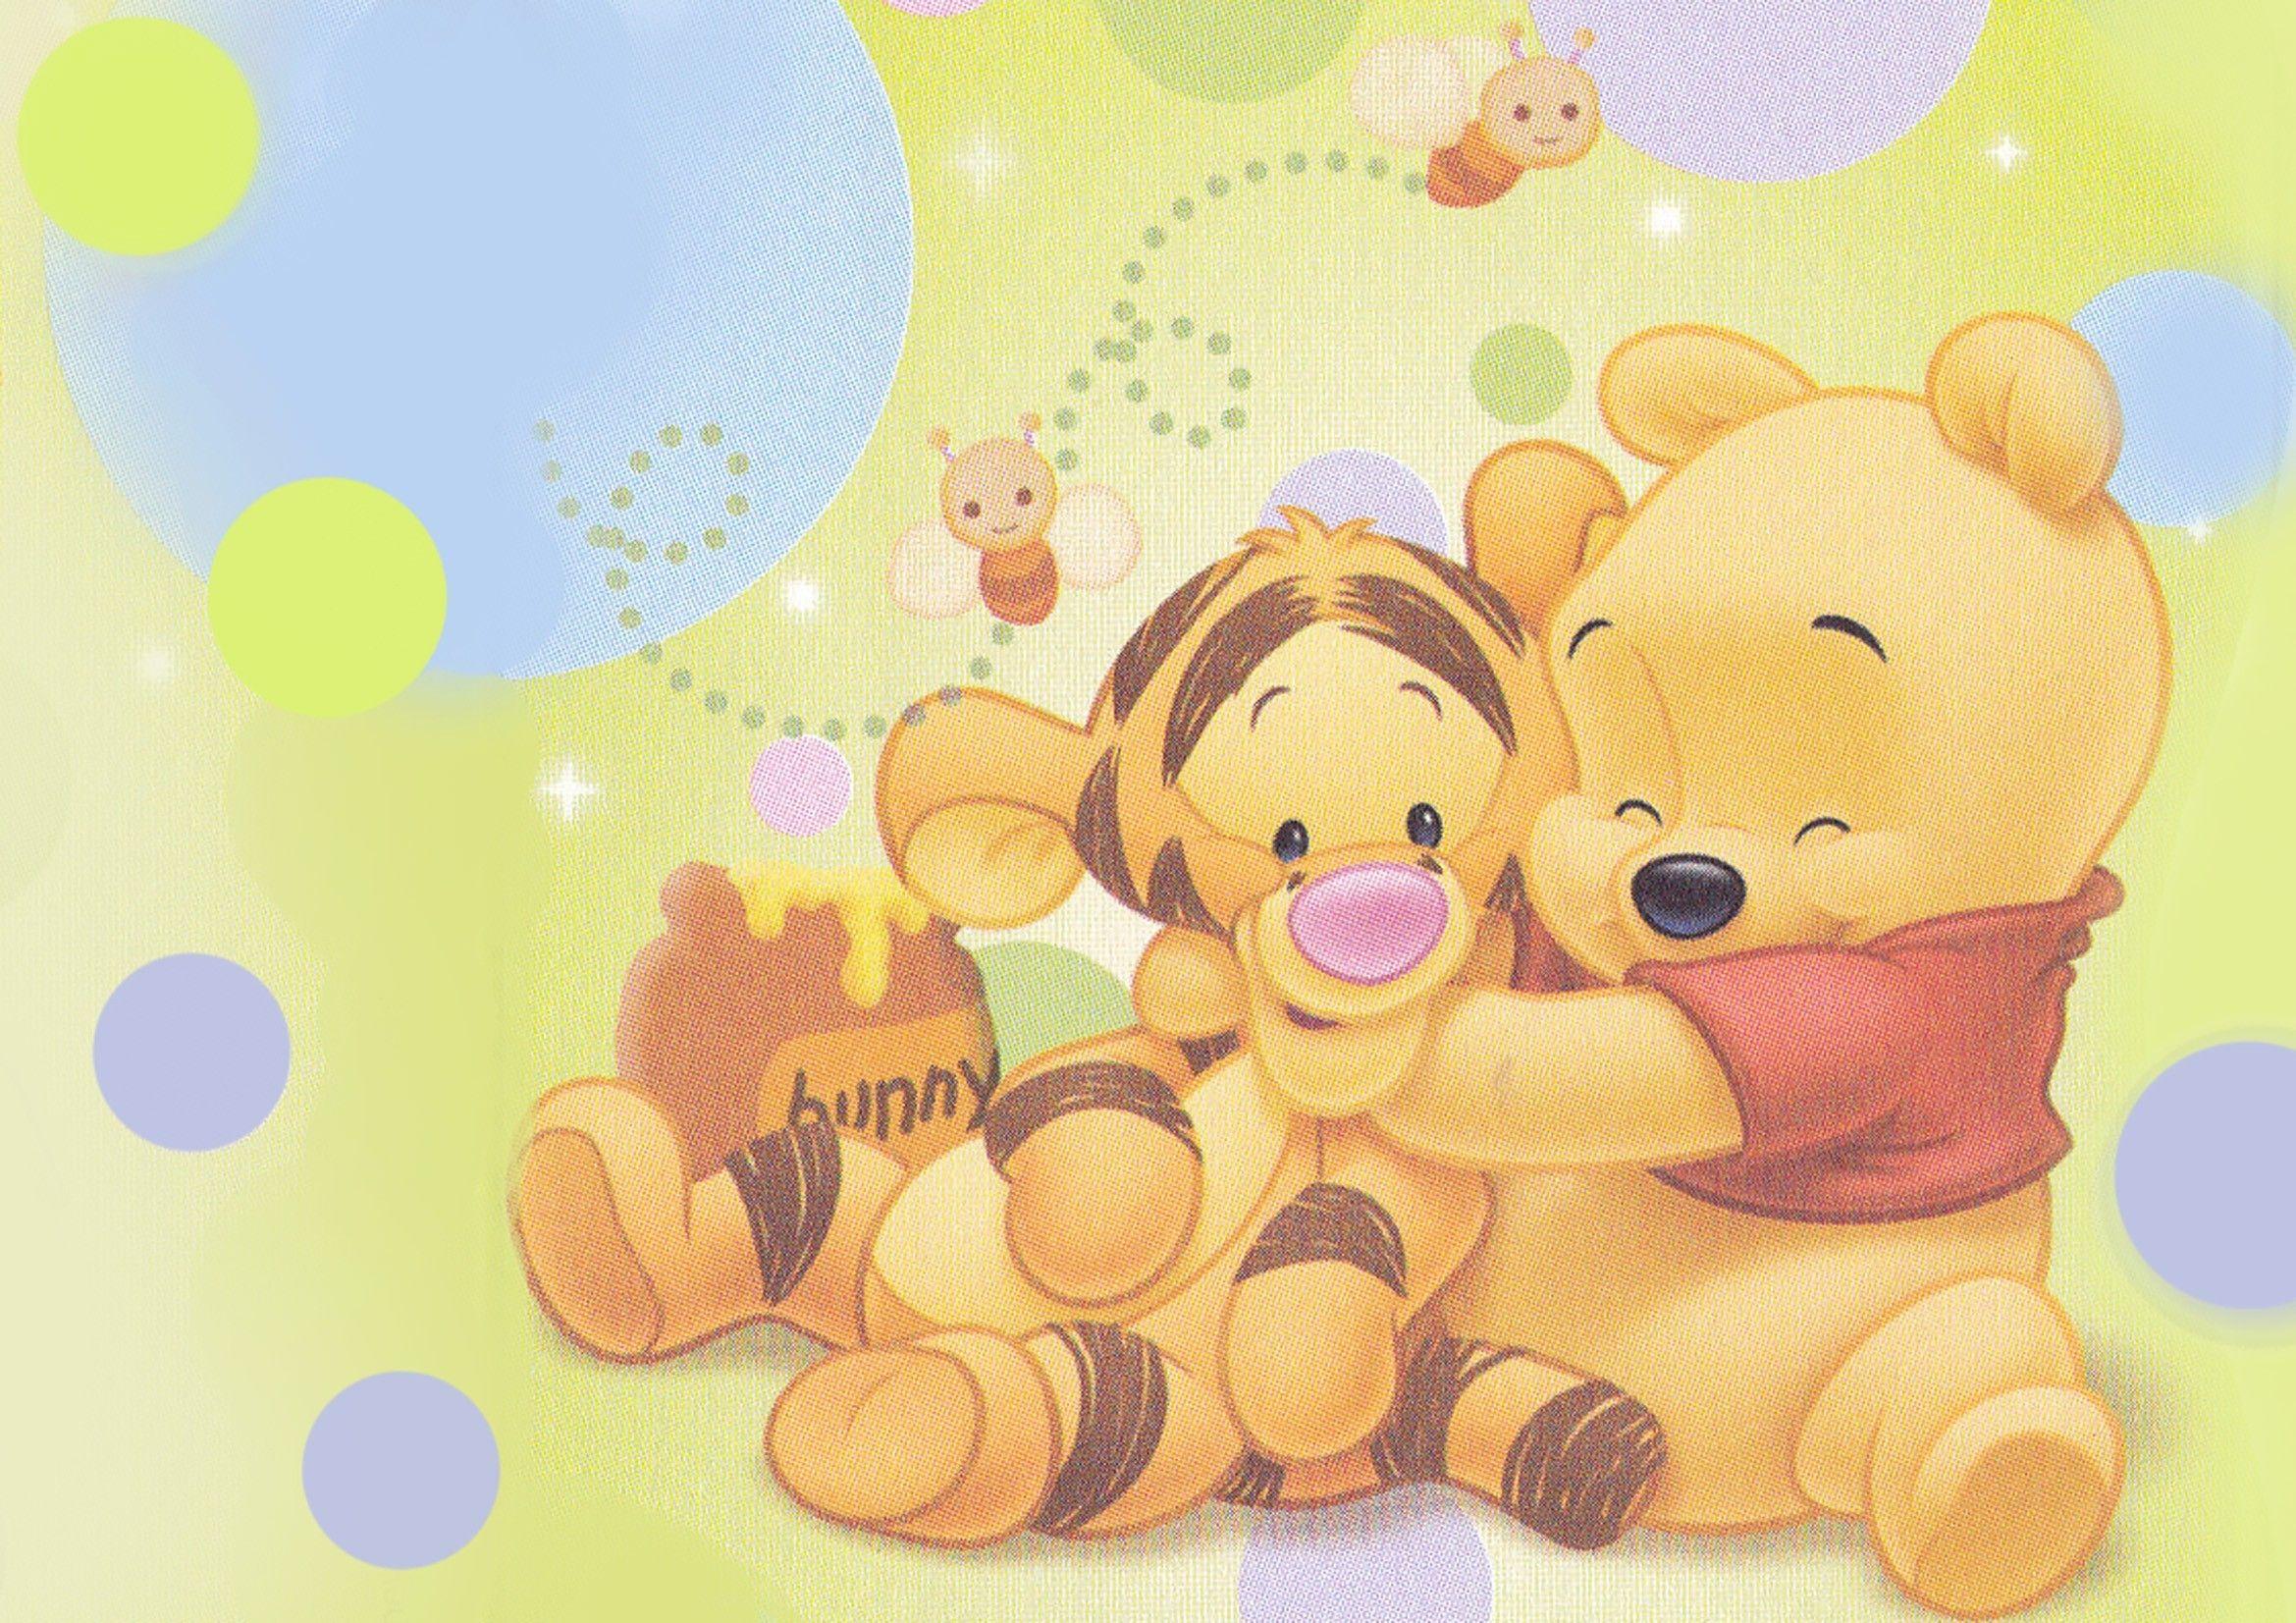 Pooh Bear Wallpaper